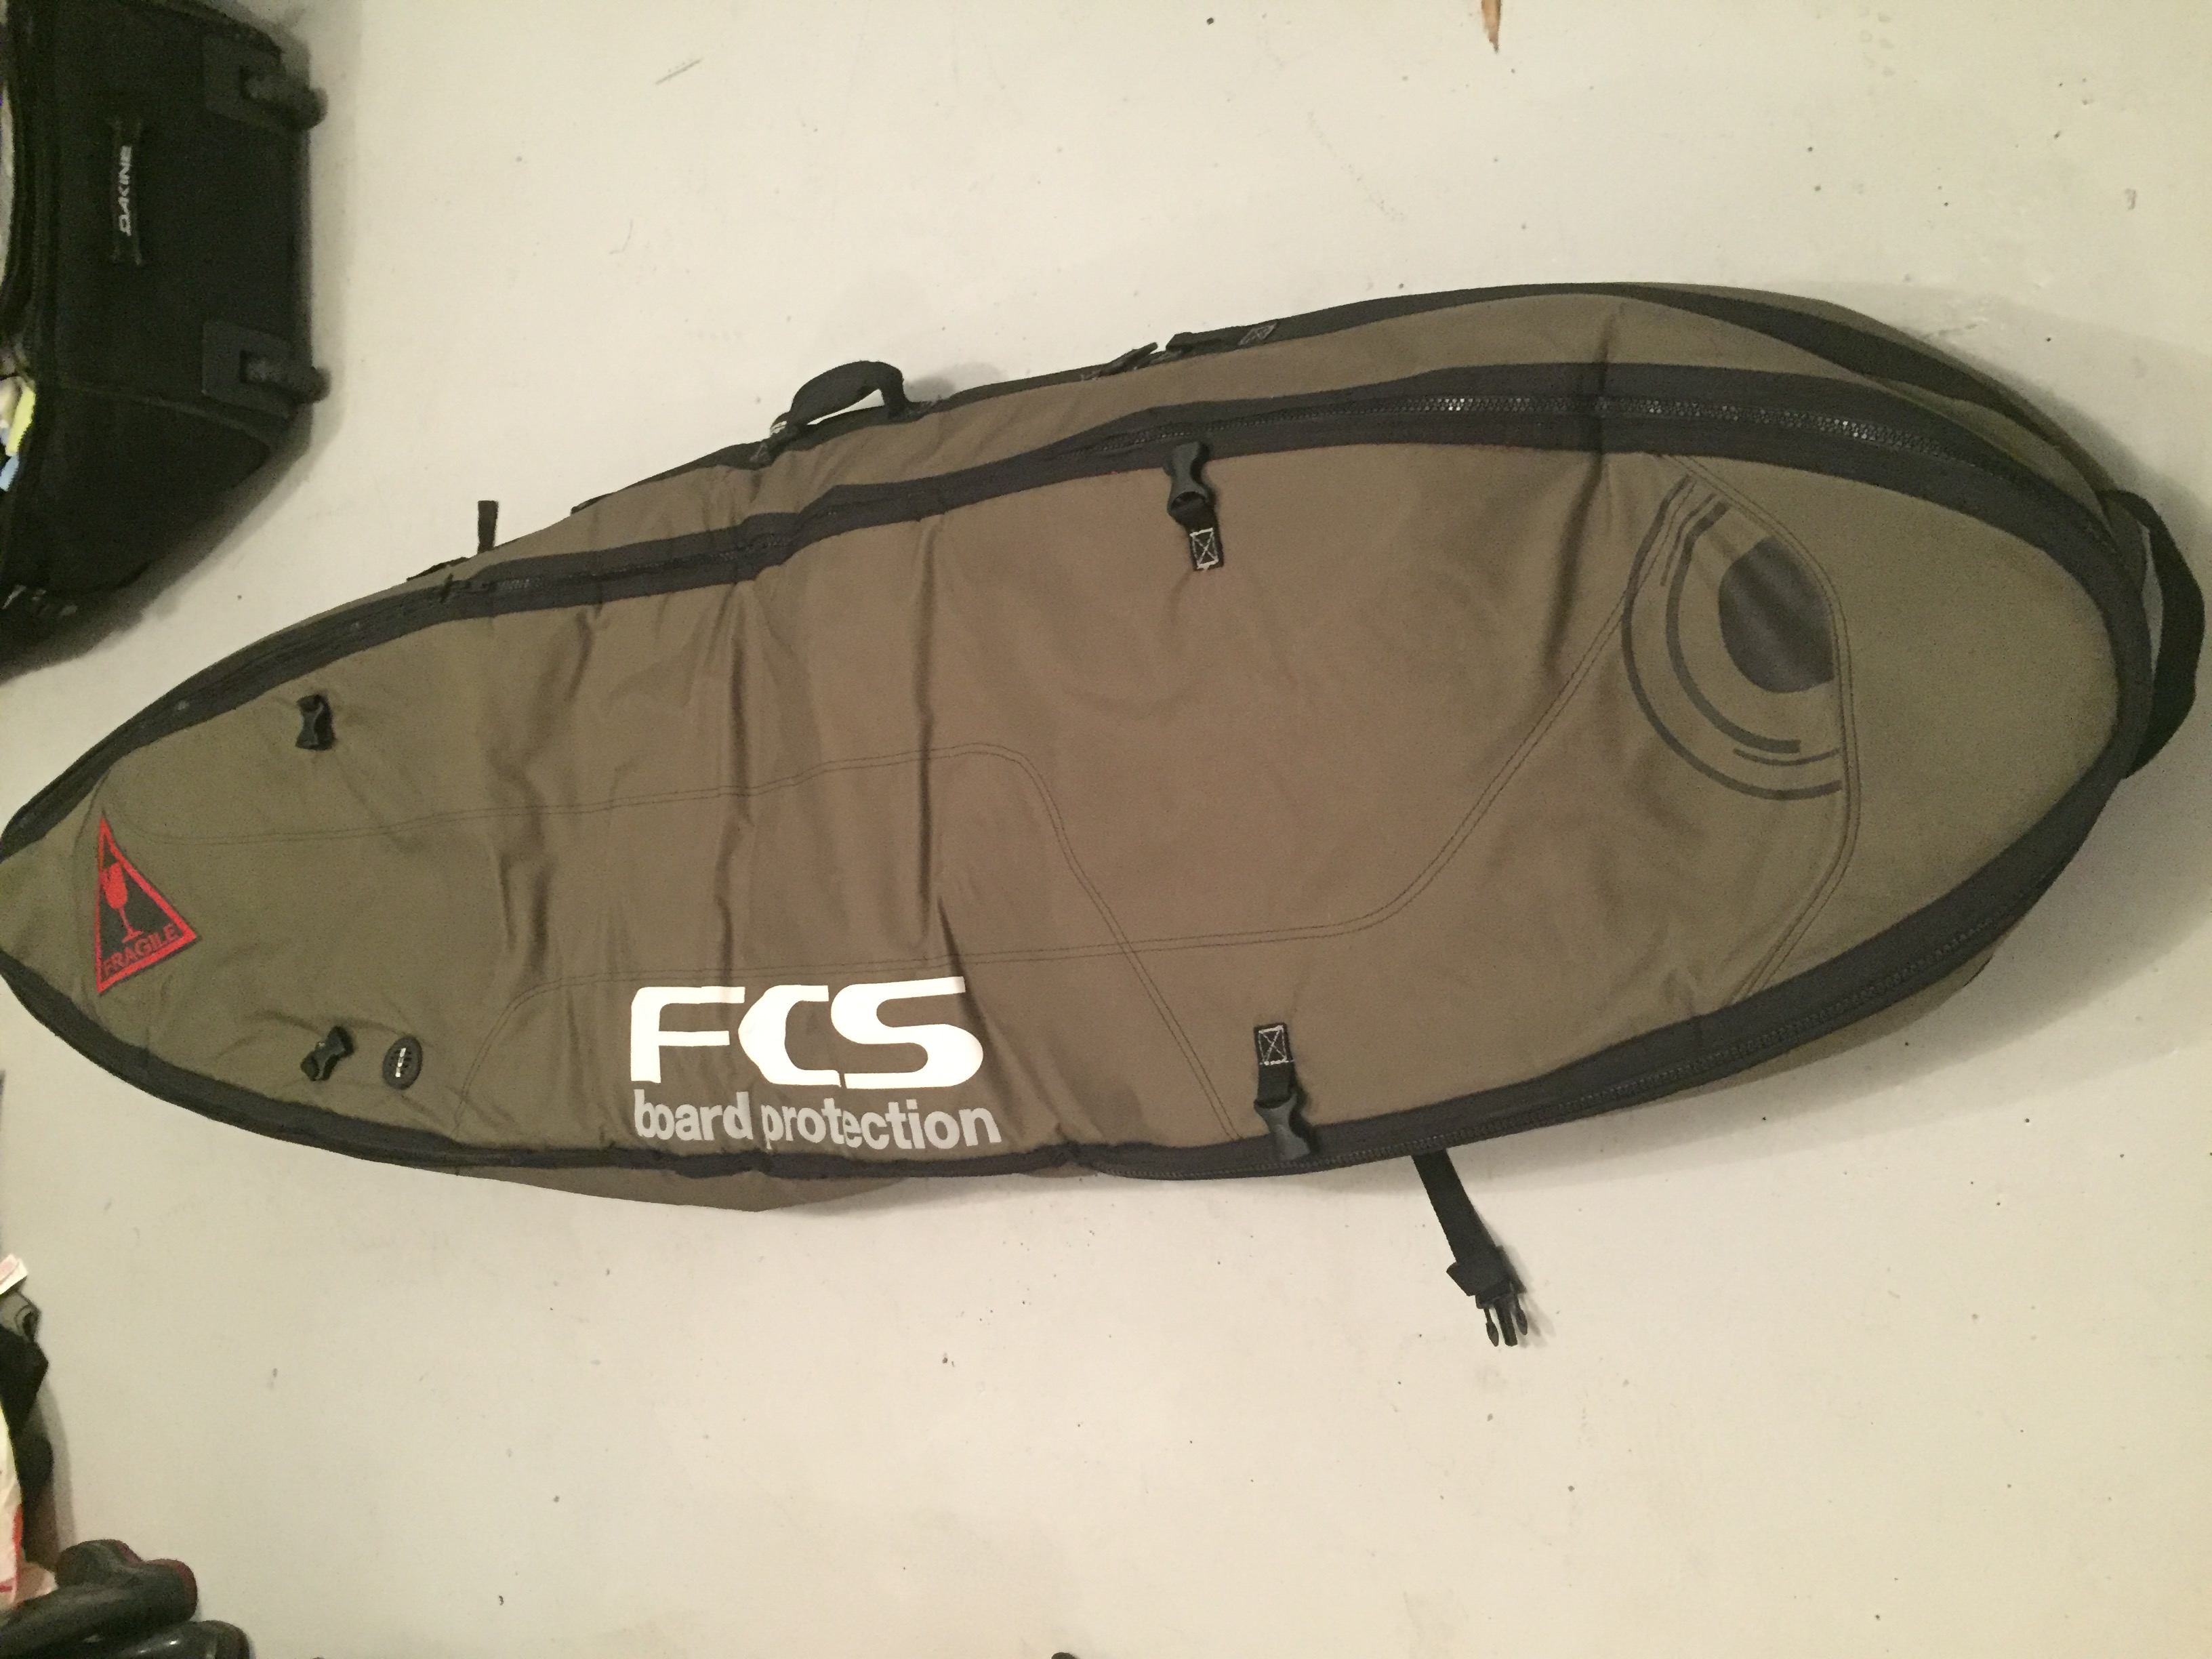 Boardbag FCS 02.JPG